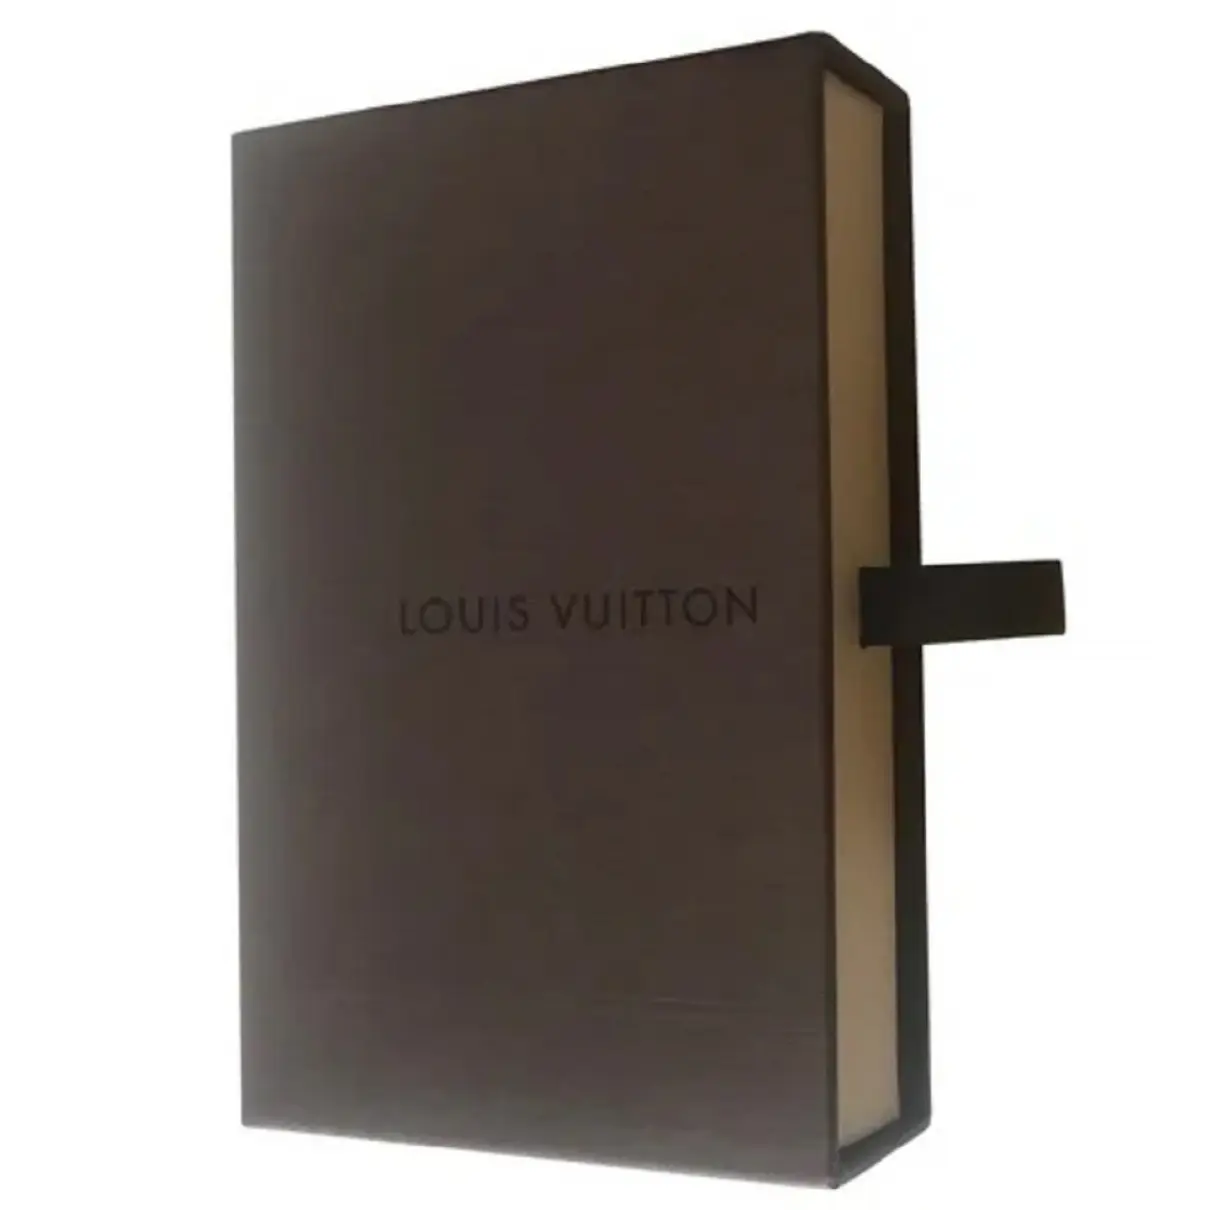 Buy Louis Vuitton Brown Home decor online